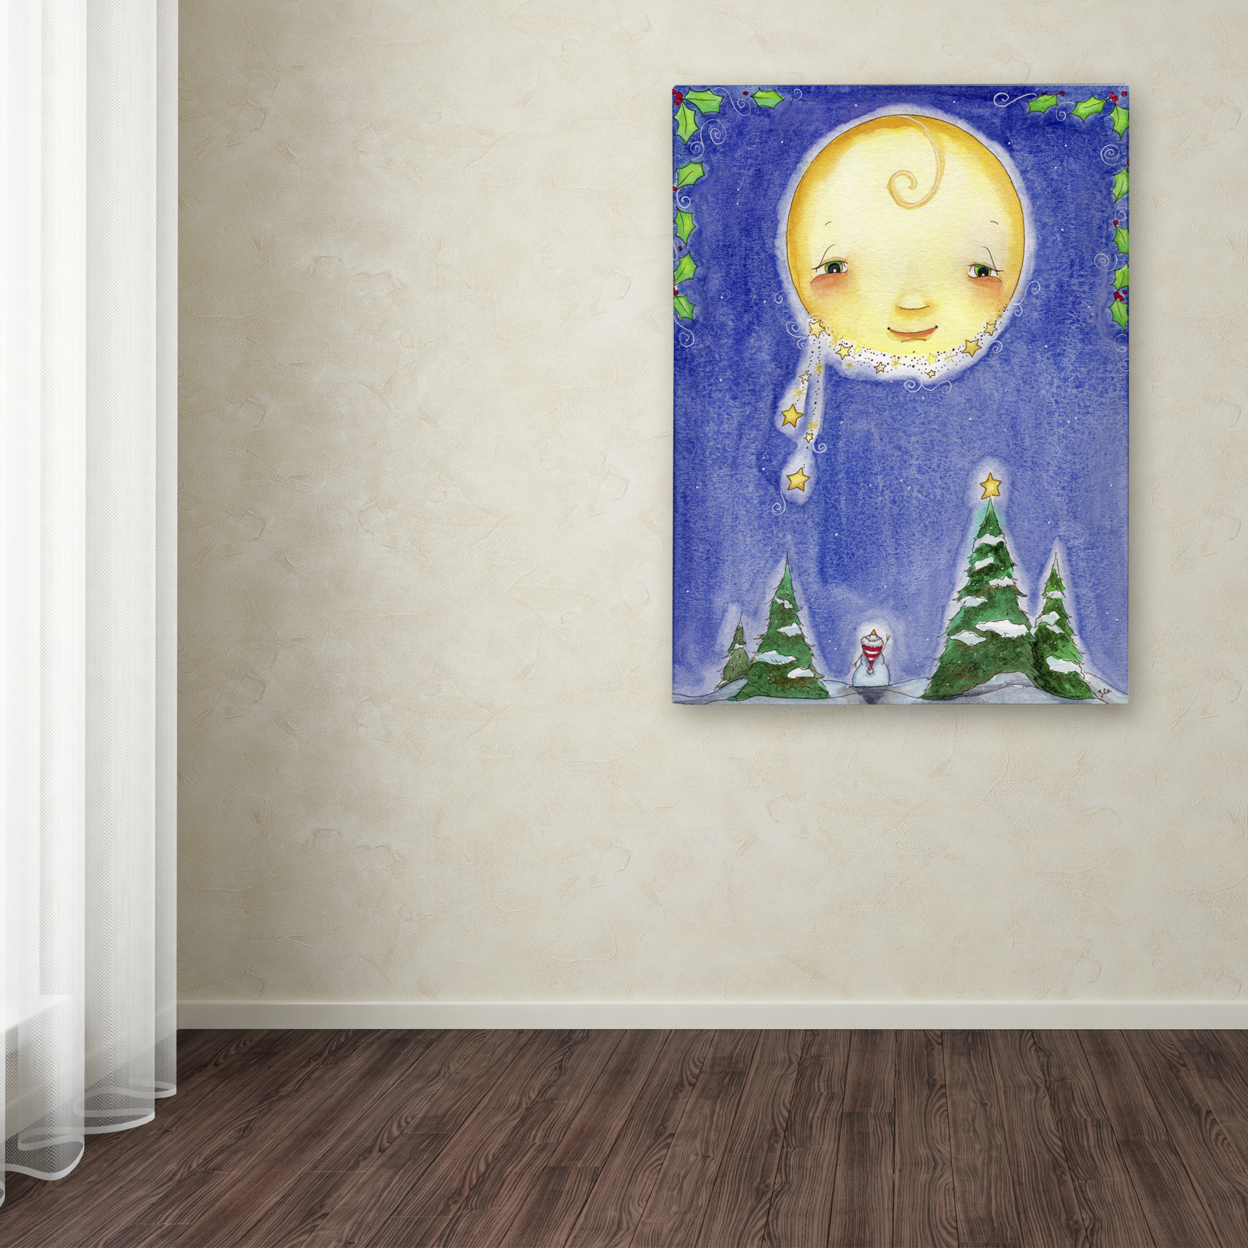 Jennifer Nilsson 'Holiday Moon' Canvas Wall Art 35 X 47 Inches